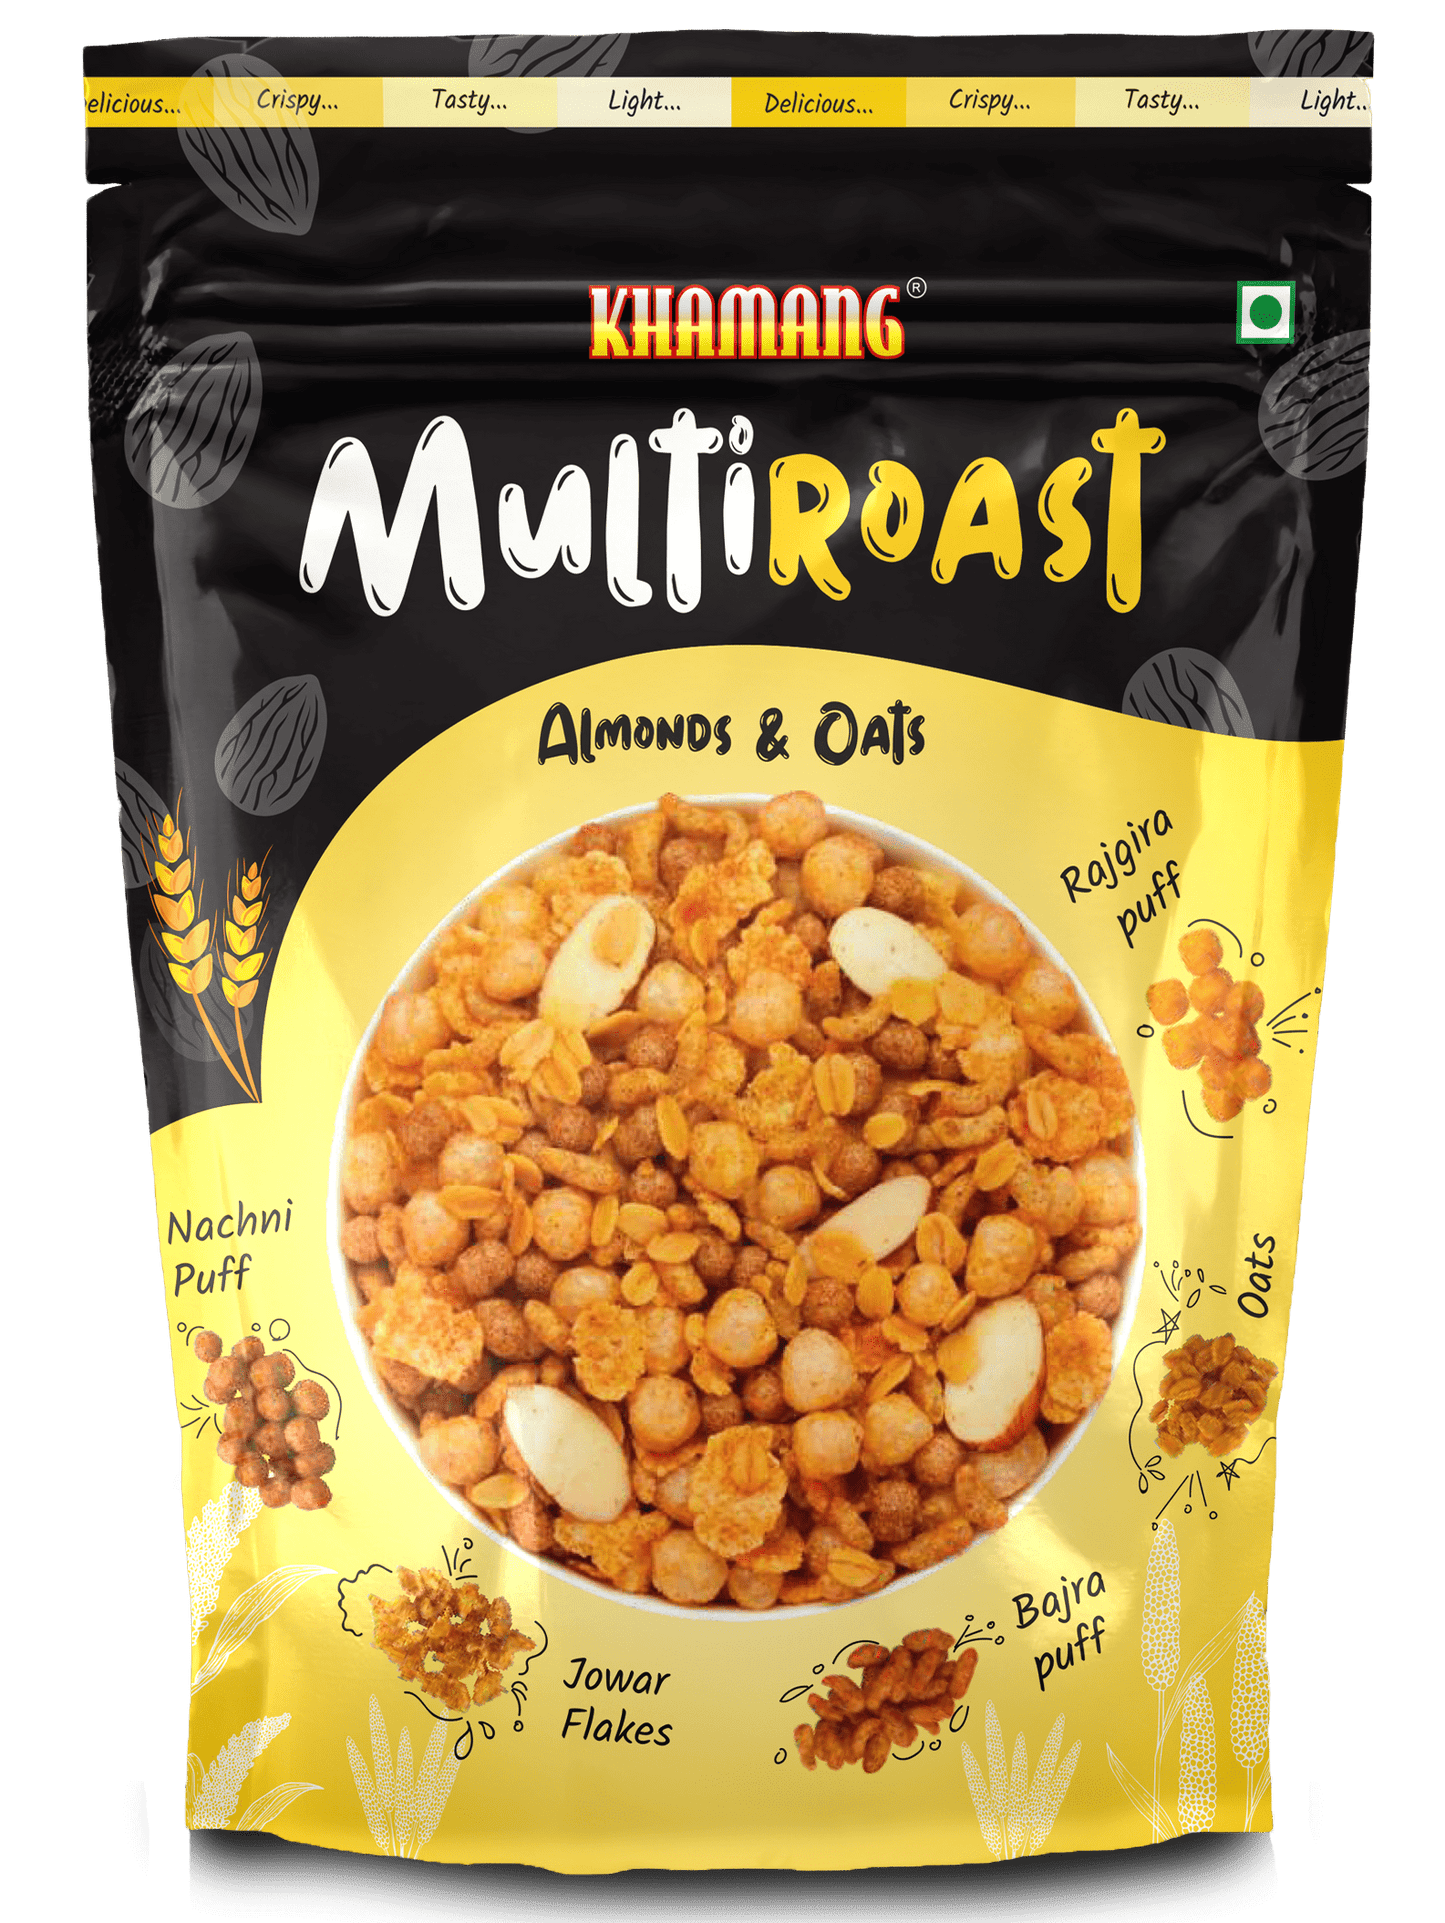 MultiRoast - Millets Chiwda